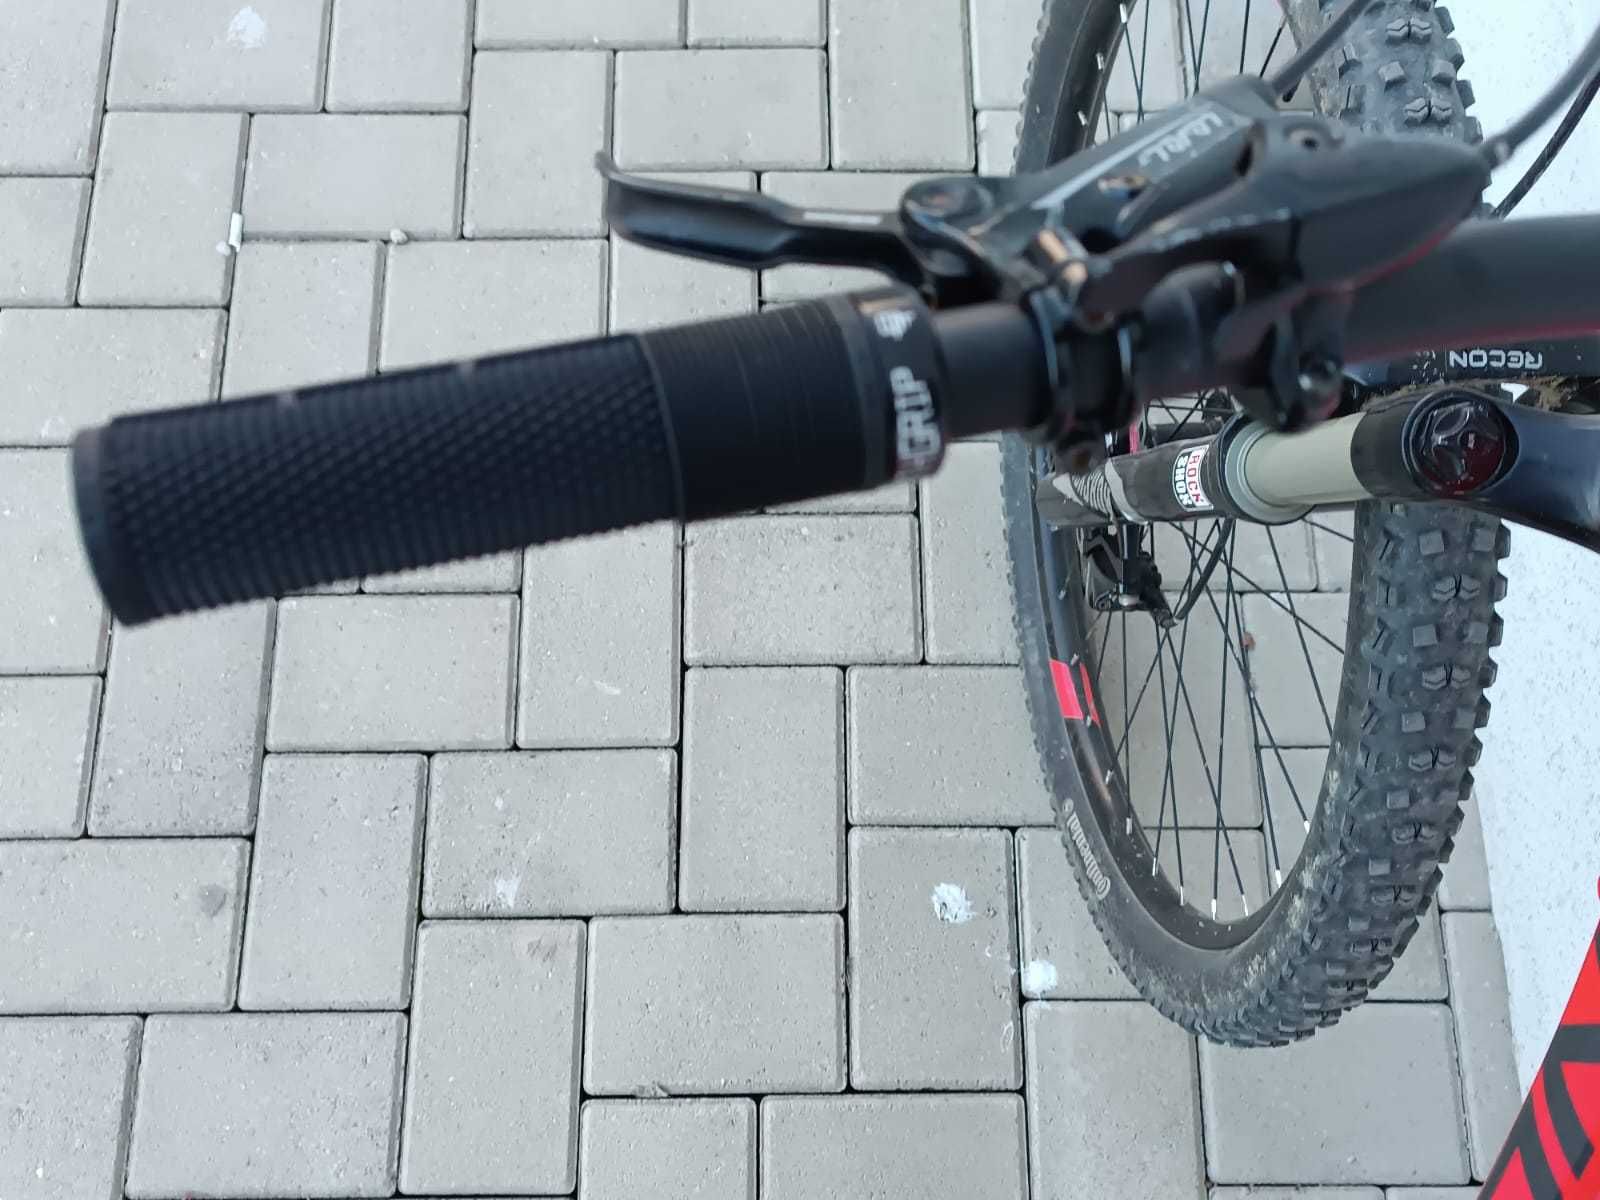 Bicicleta hardtail Norco